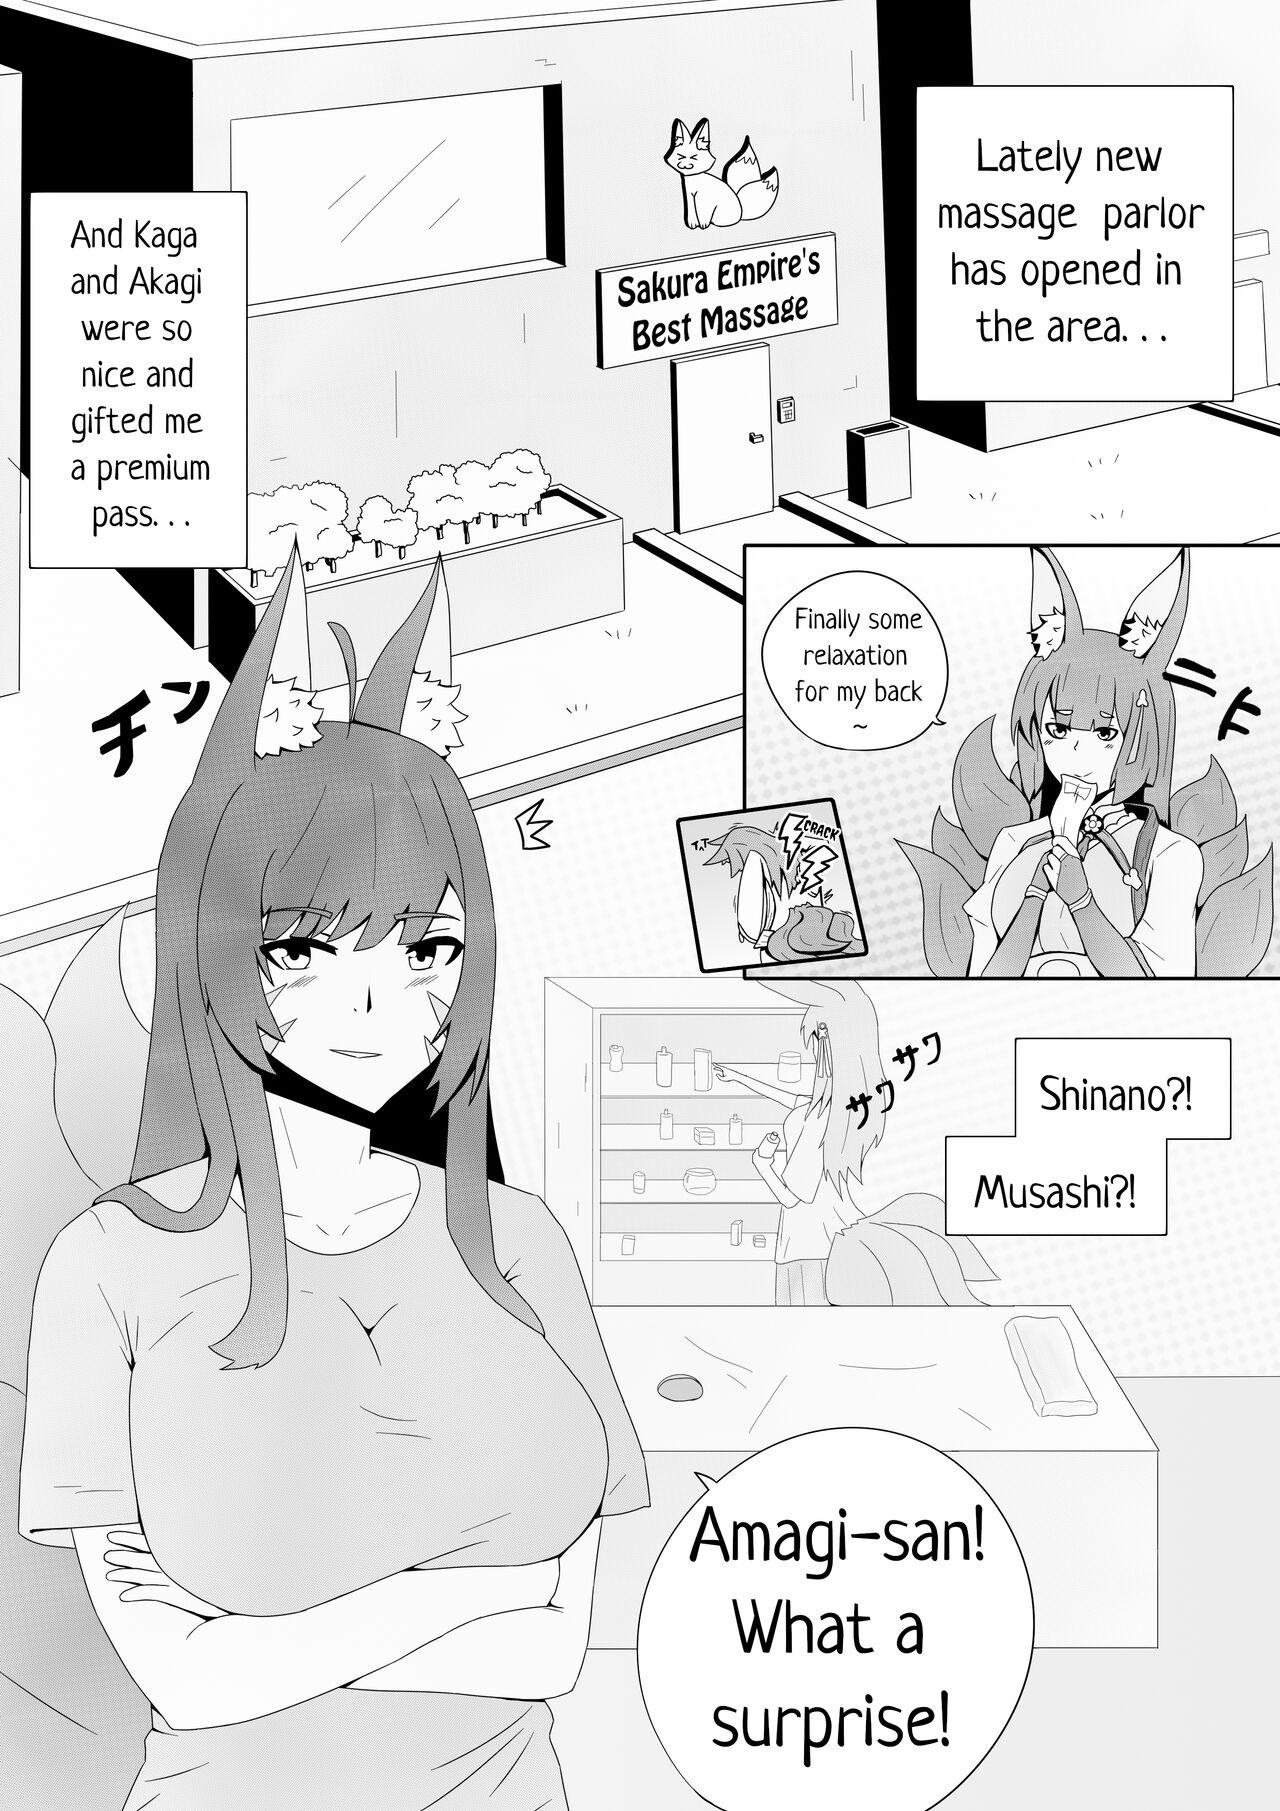 Amagi's very special massage 2